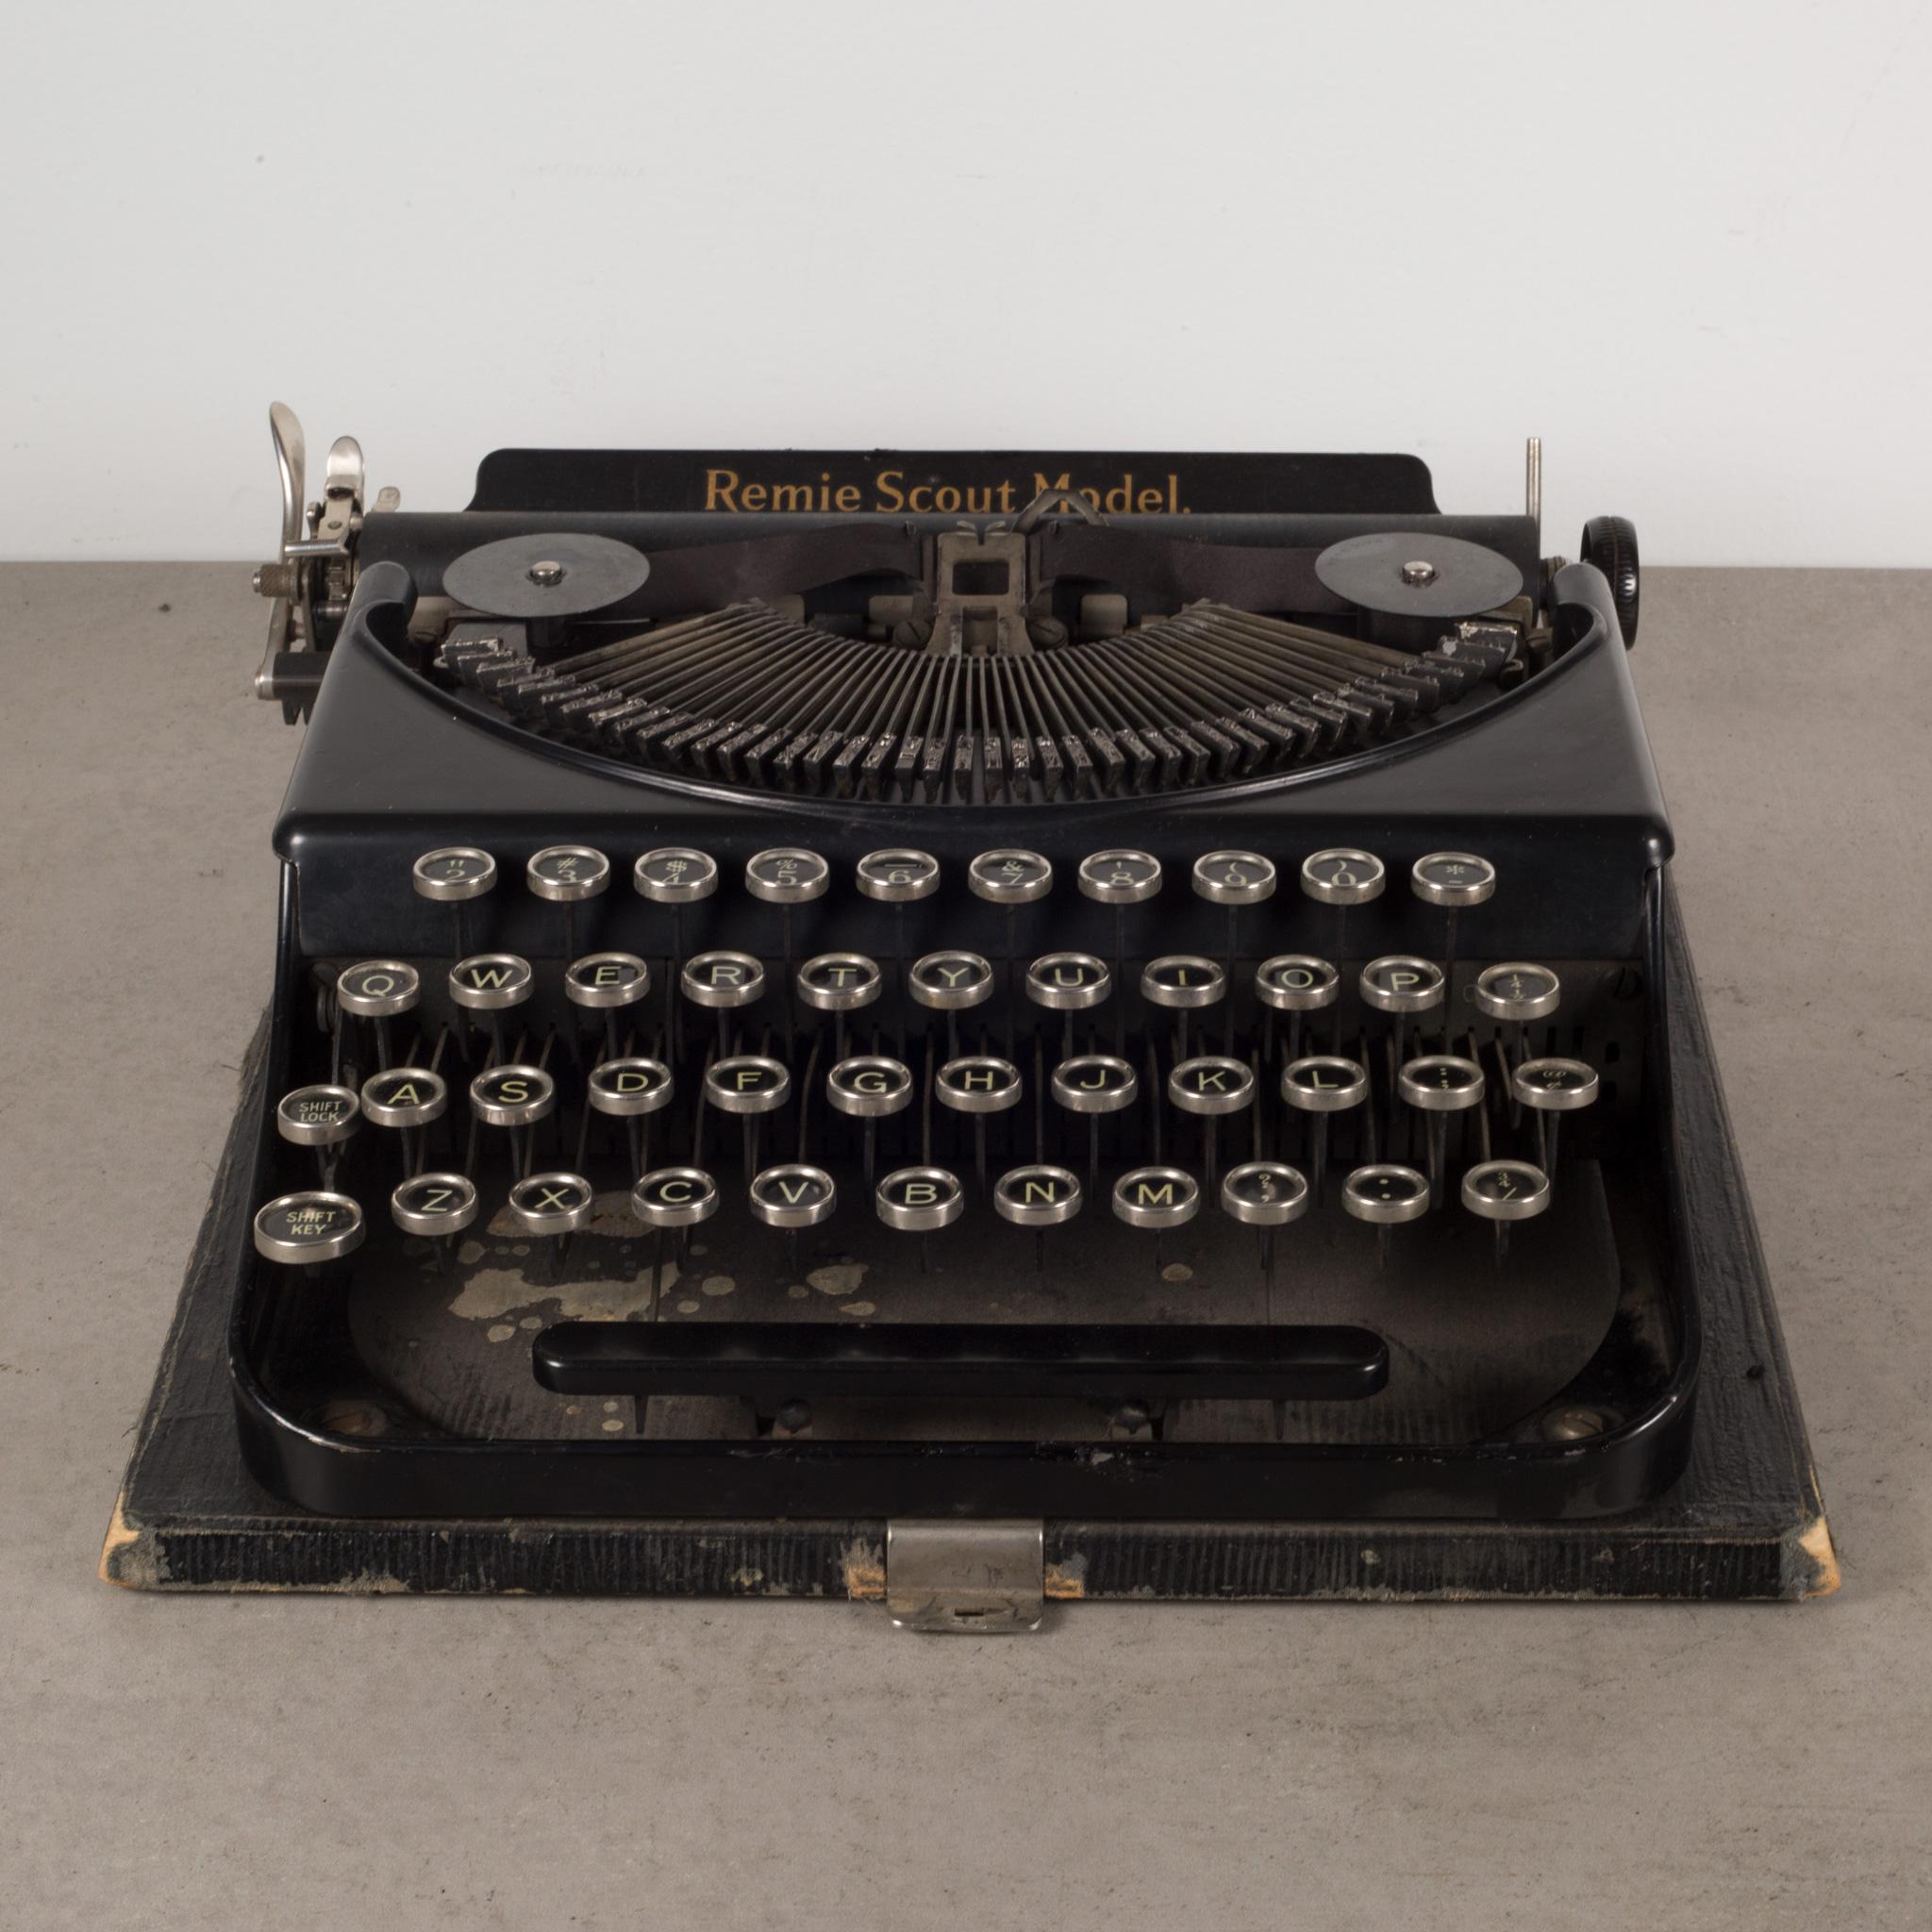 Art Deco Antique Refurbished Portable Remie Scout Model Typewriter, C.1939